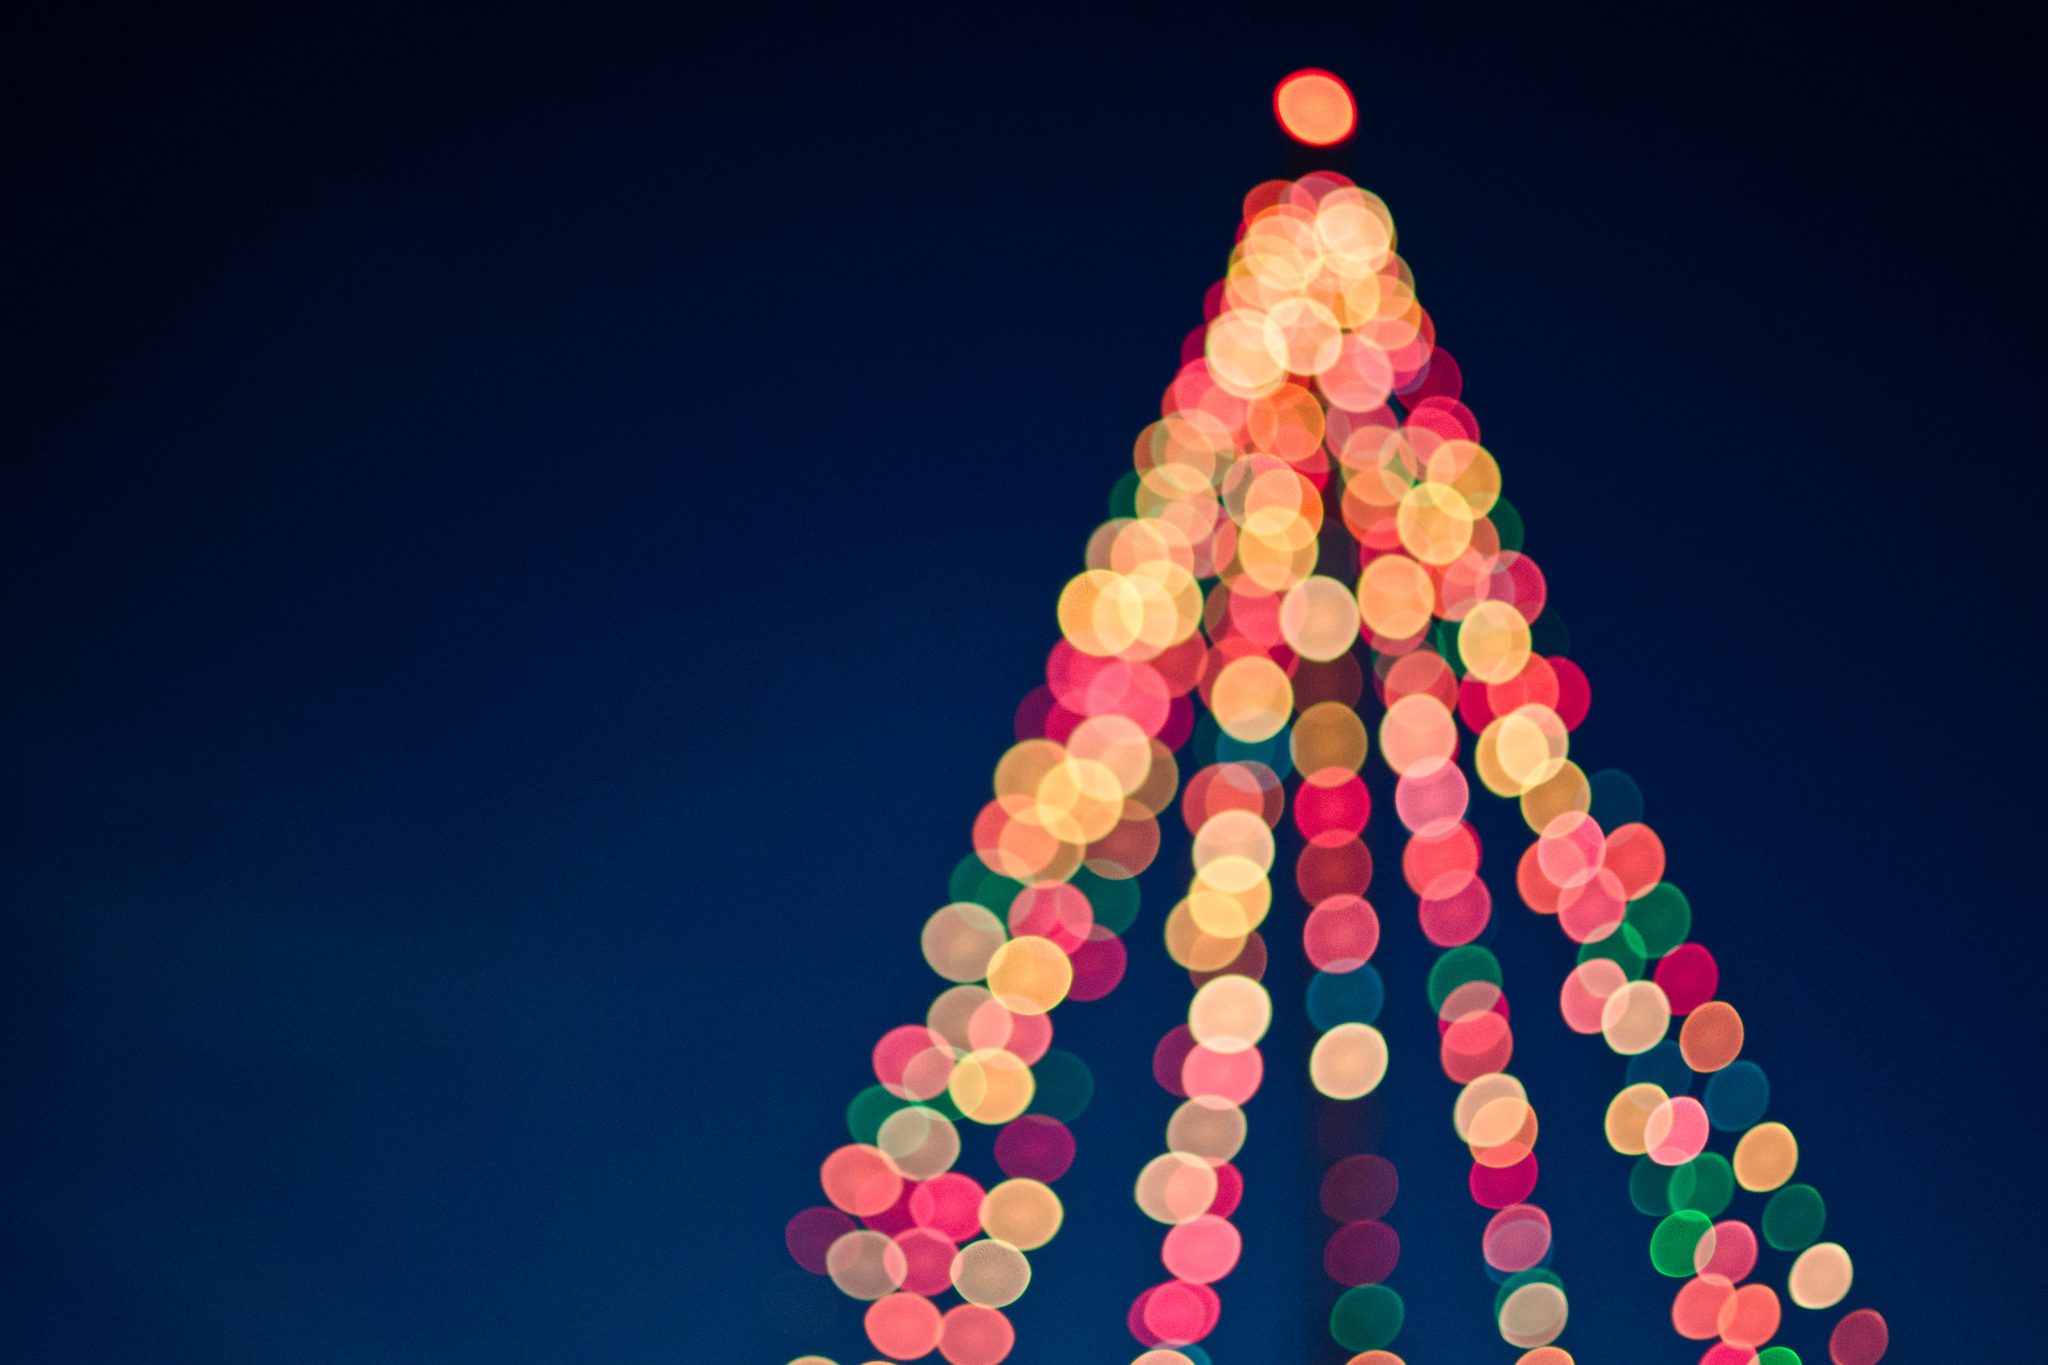 Get into the festive spirit this season!